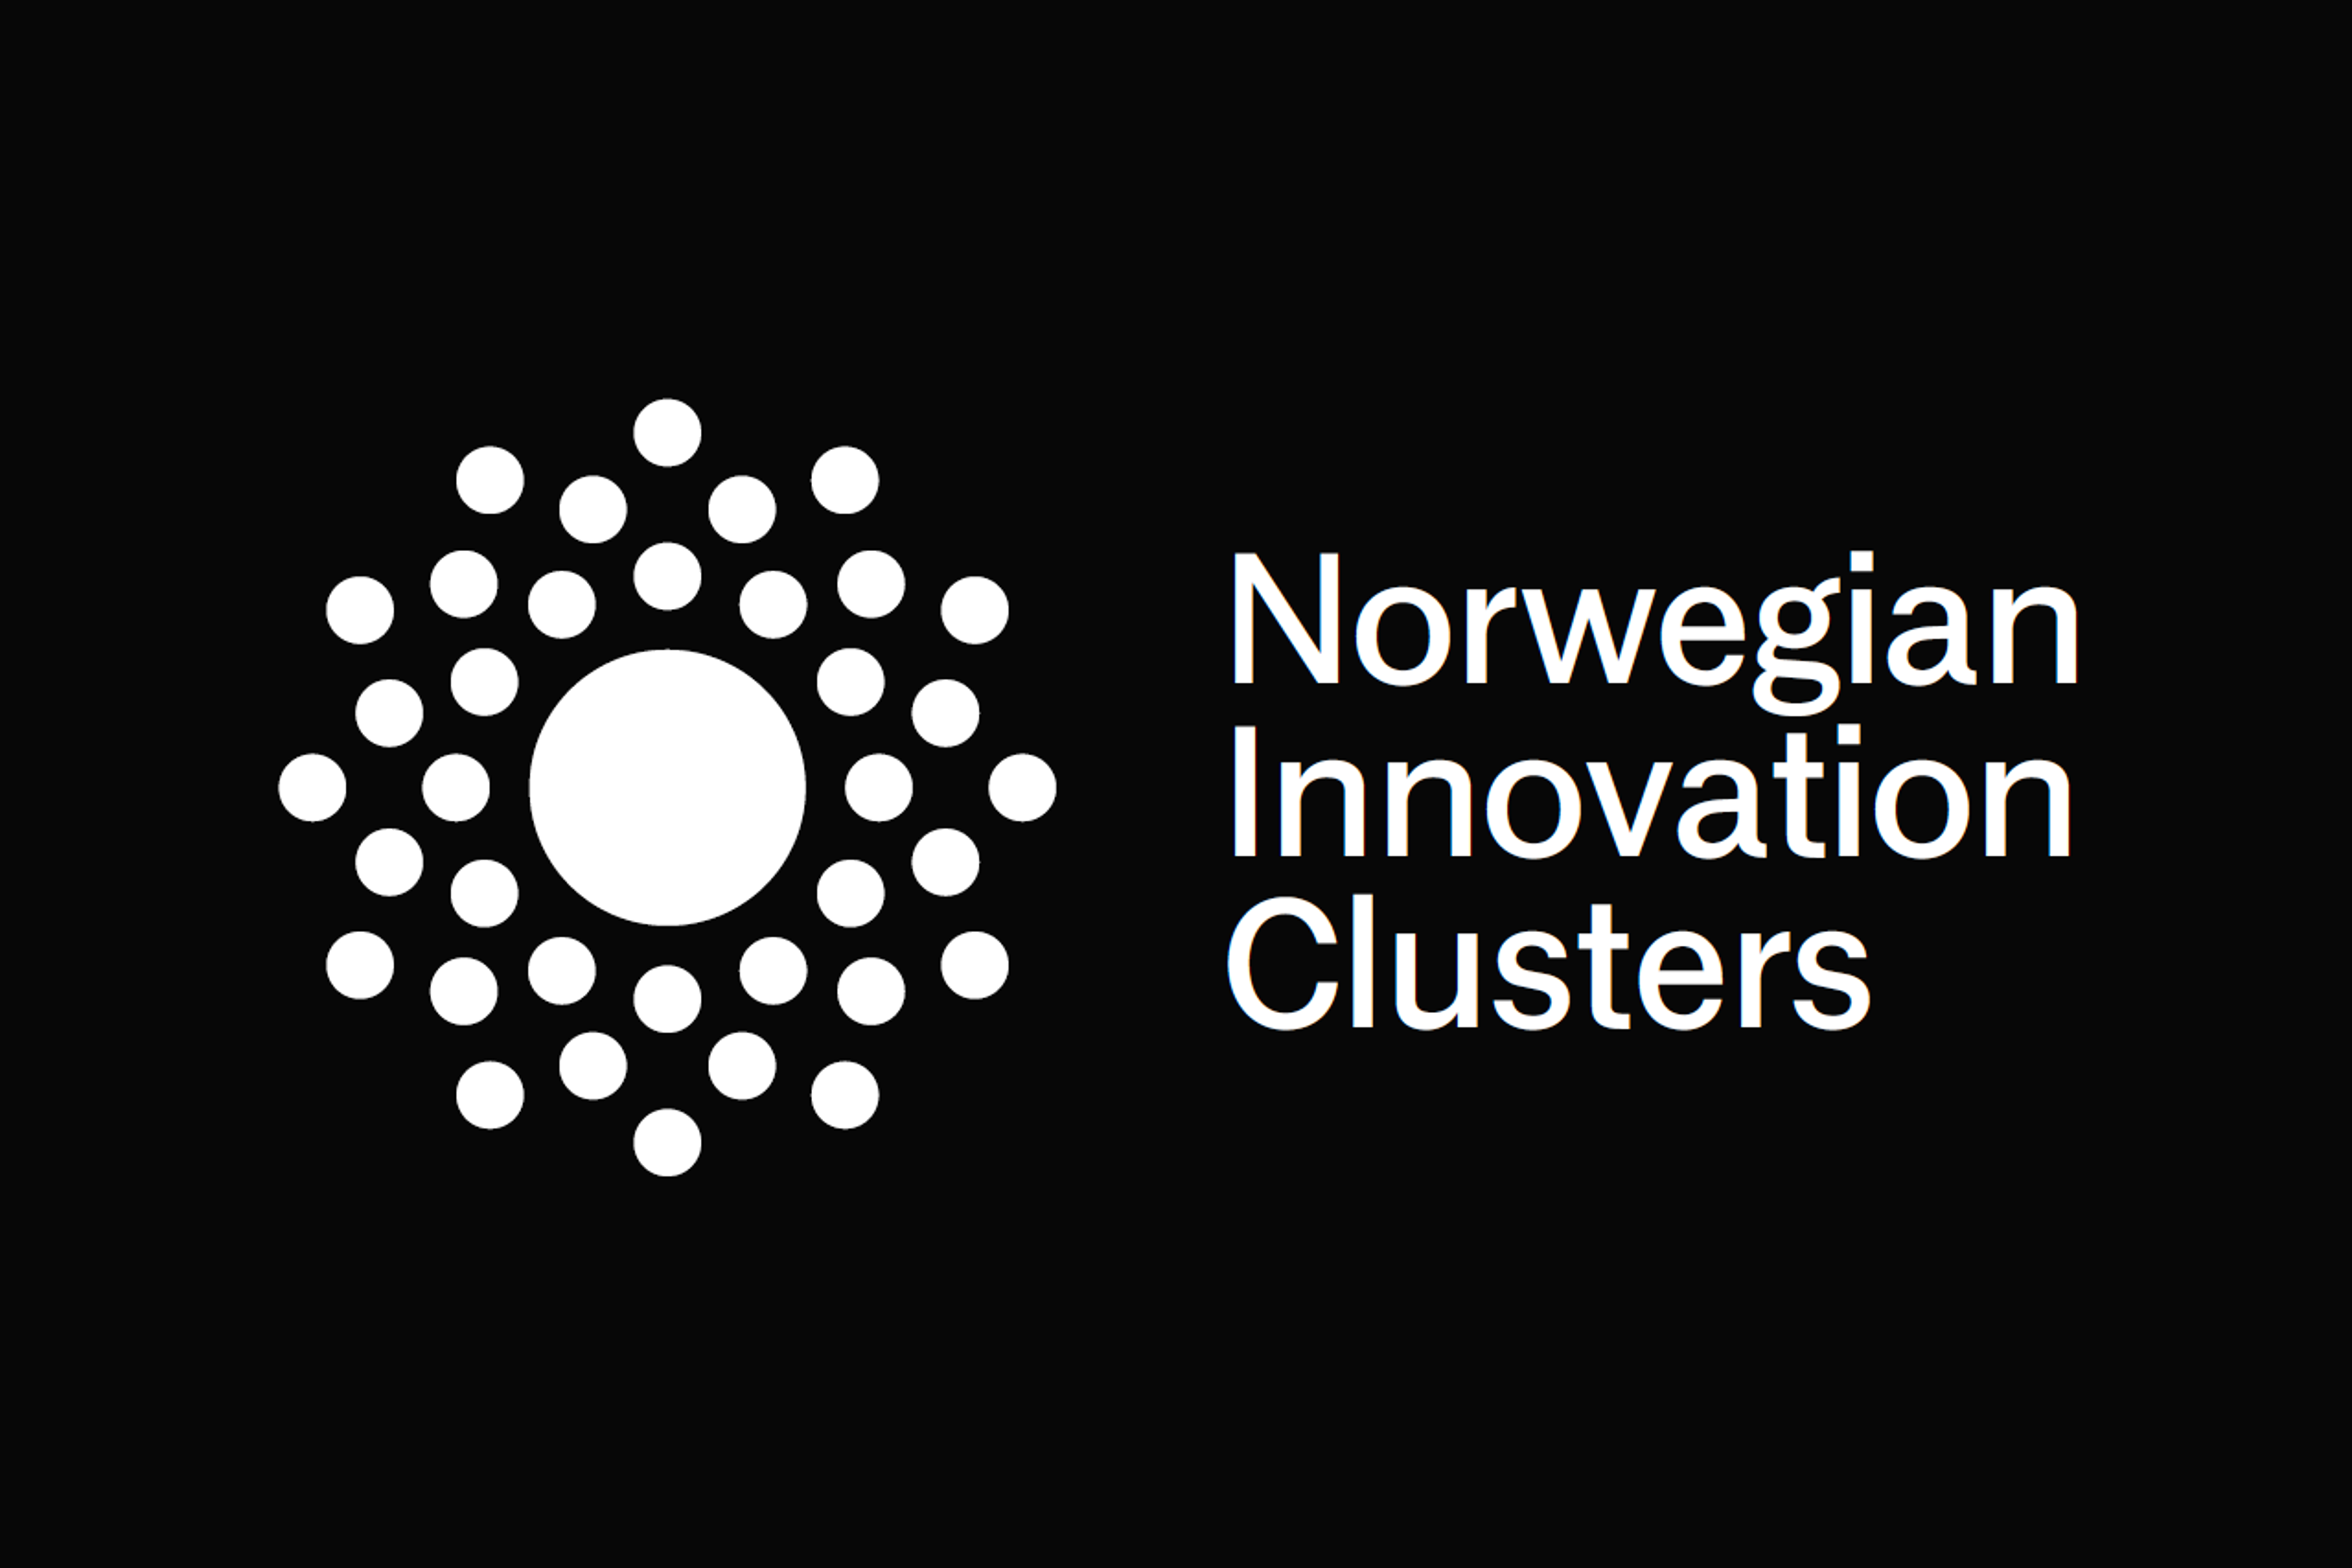 Norwegian Innovation Clusters - sort logo